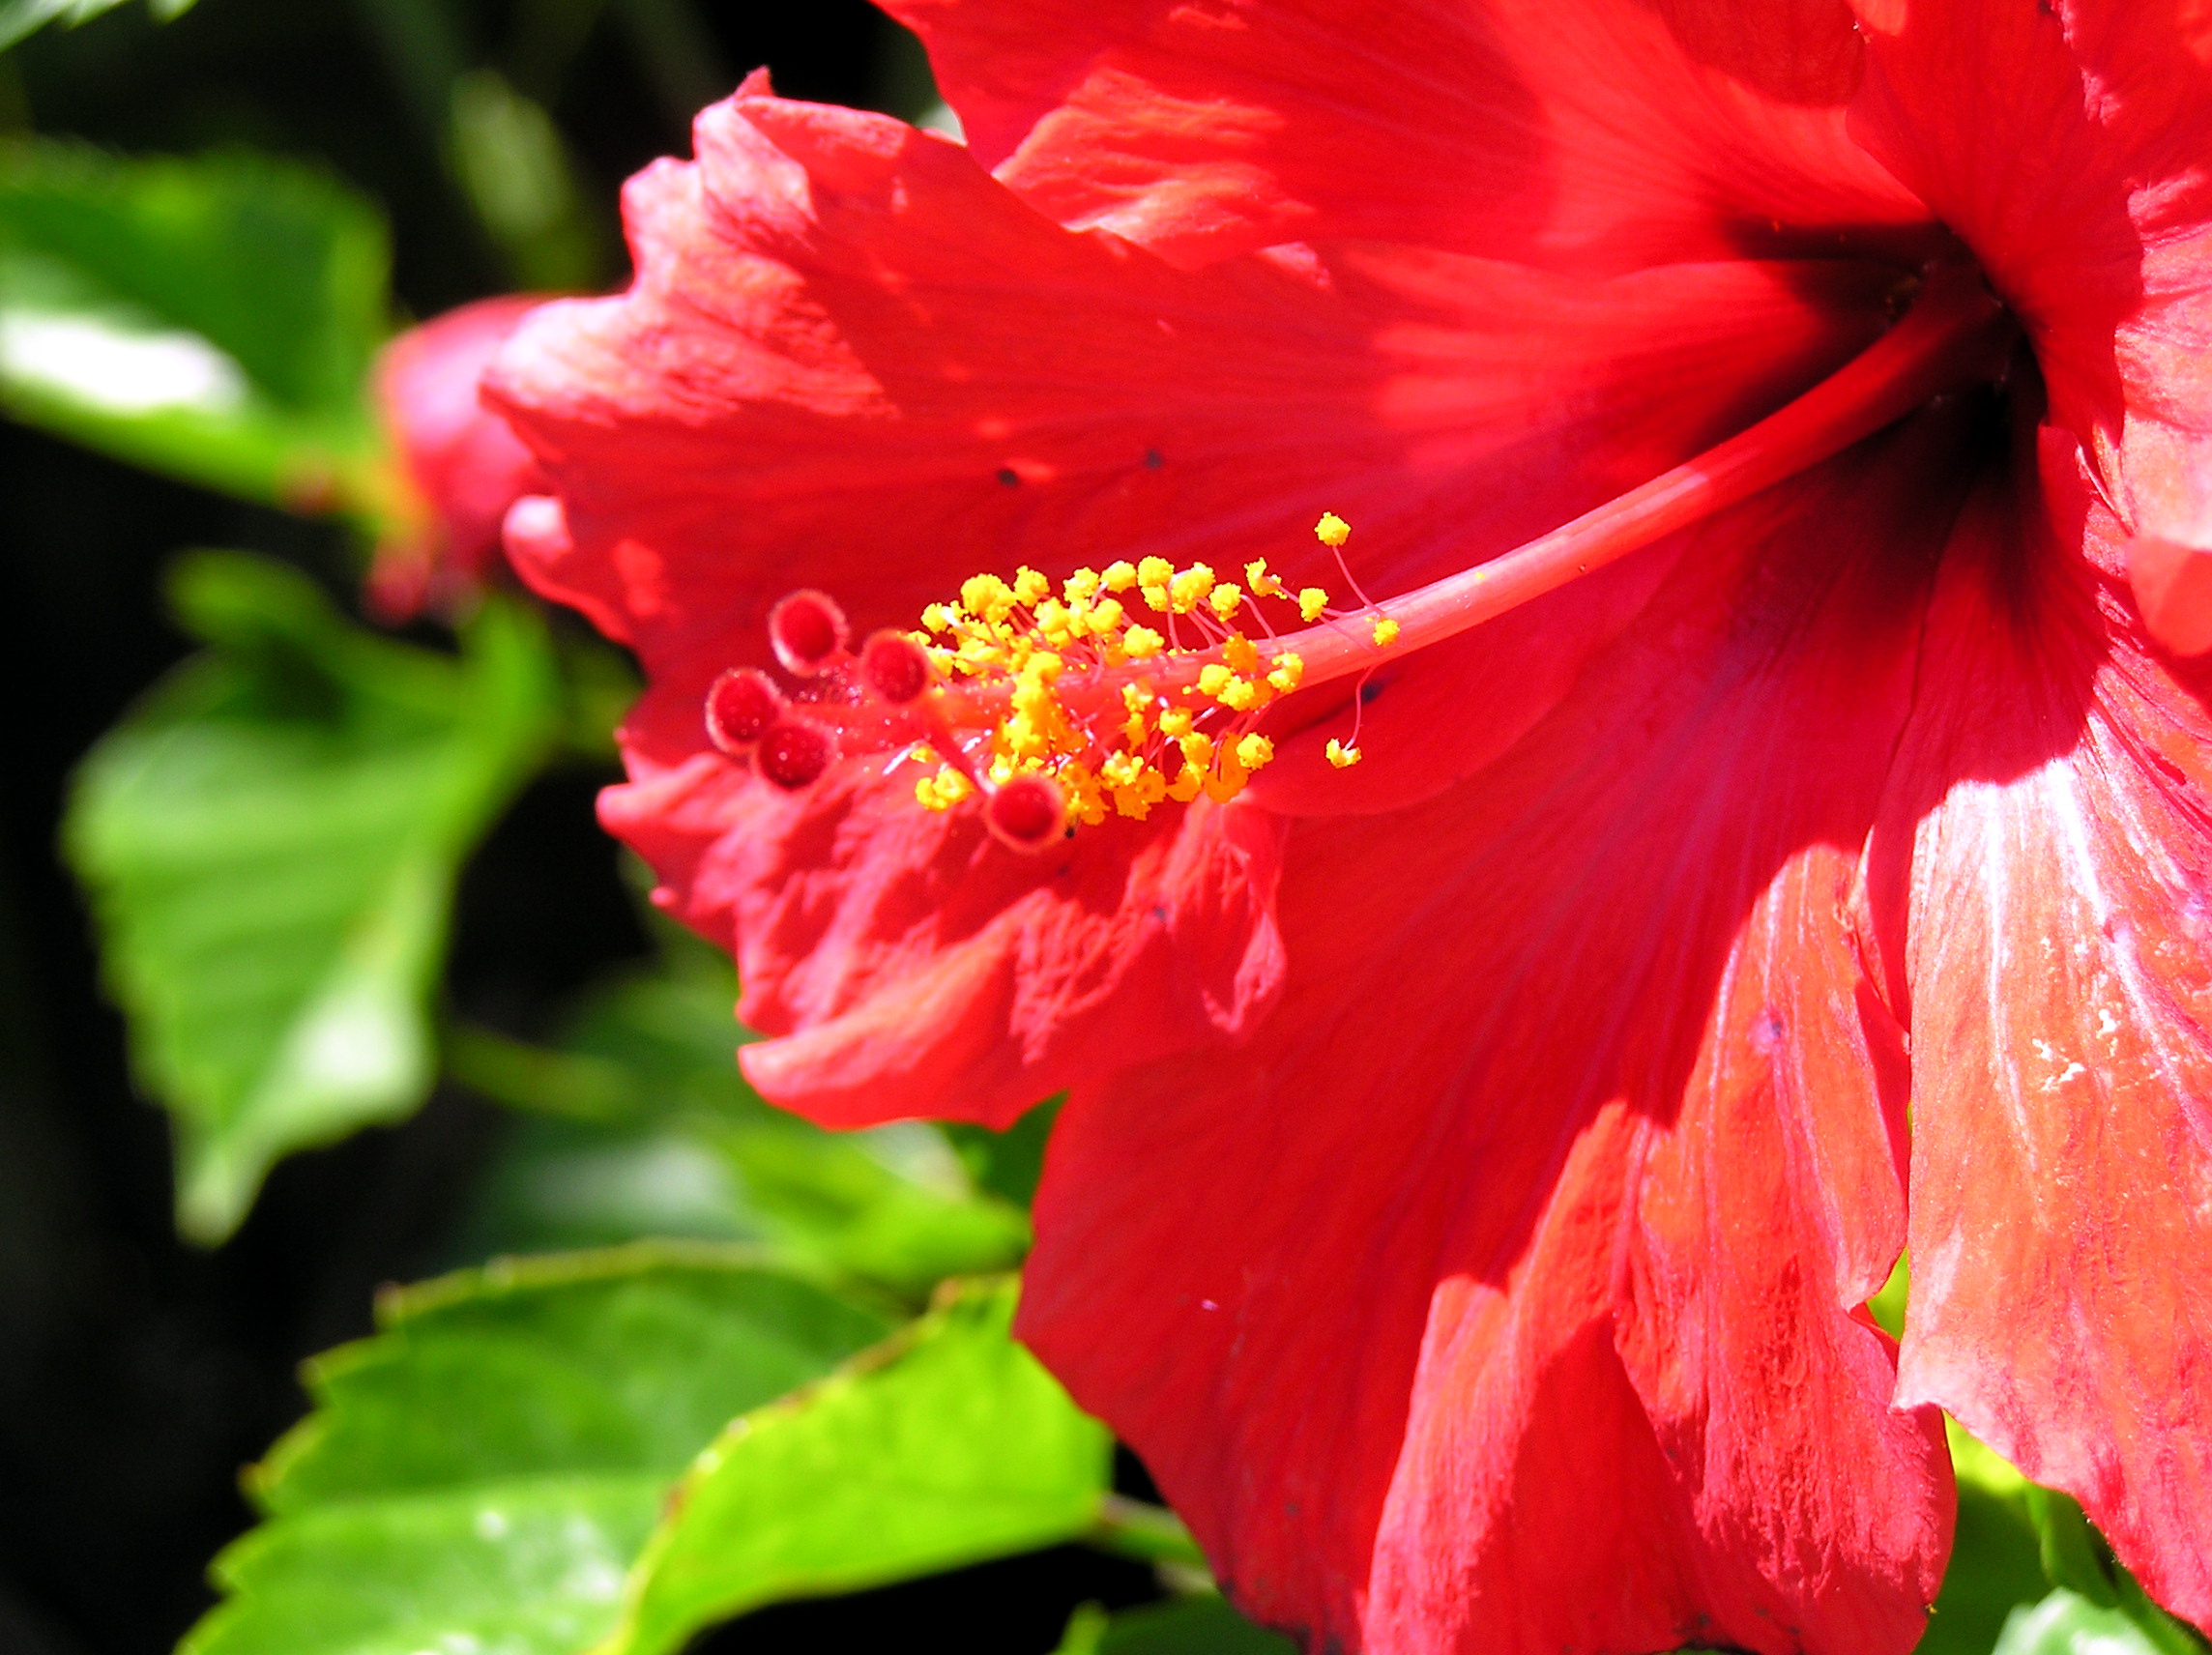 File:Red flower open.jpg - Wikimedia Commons